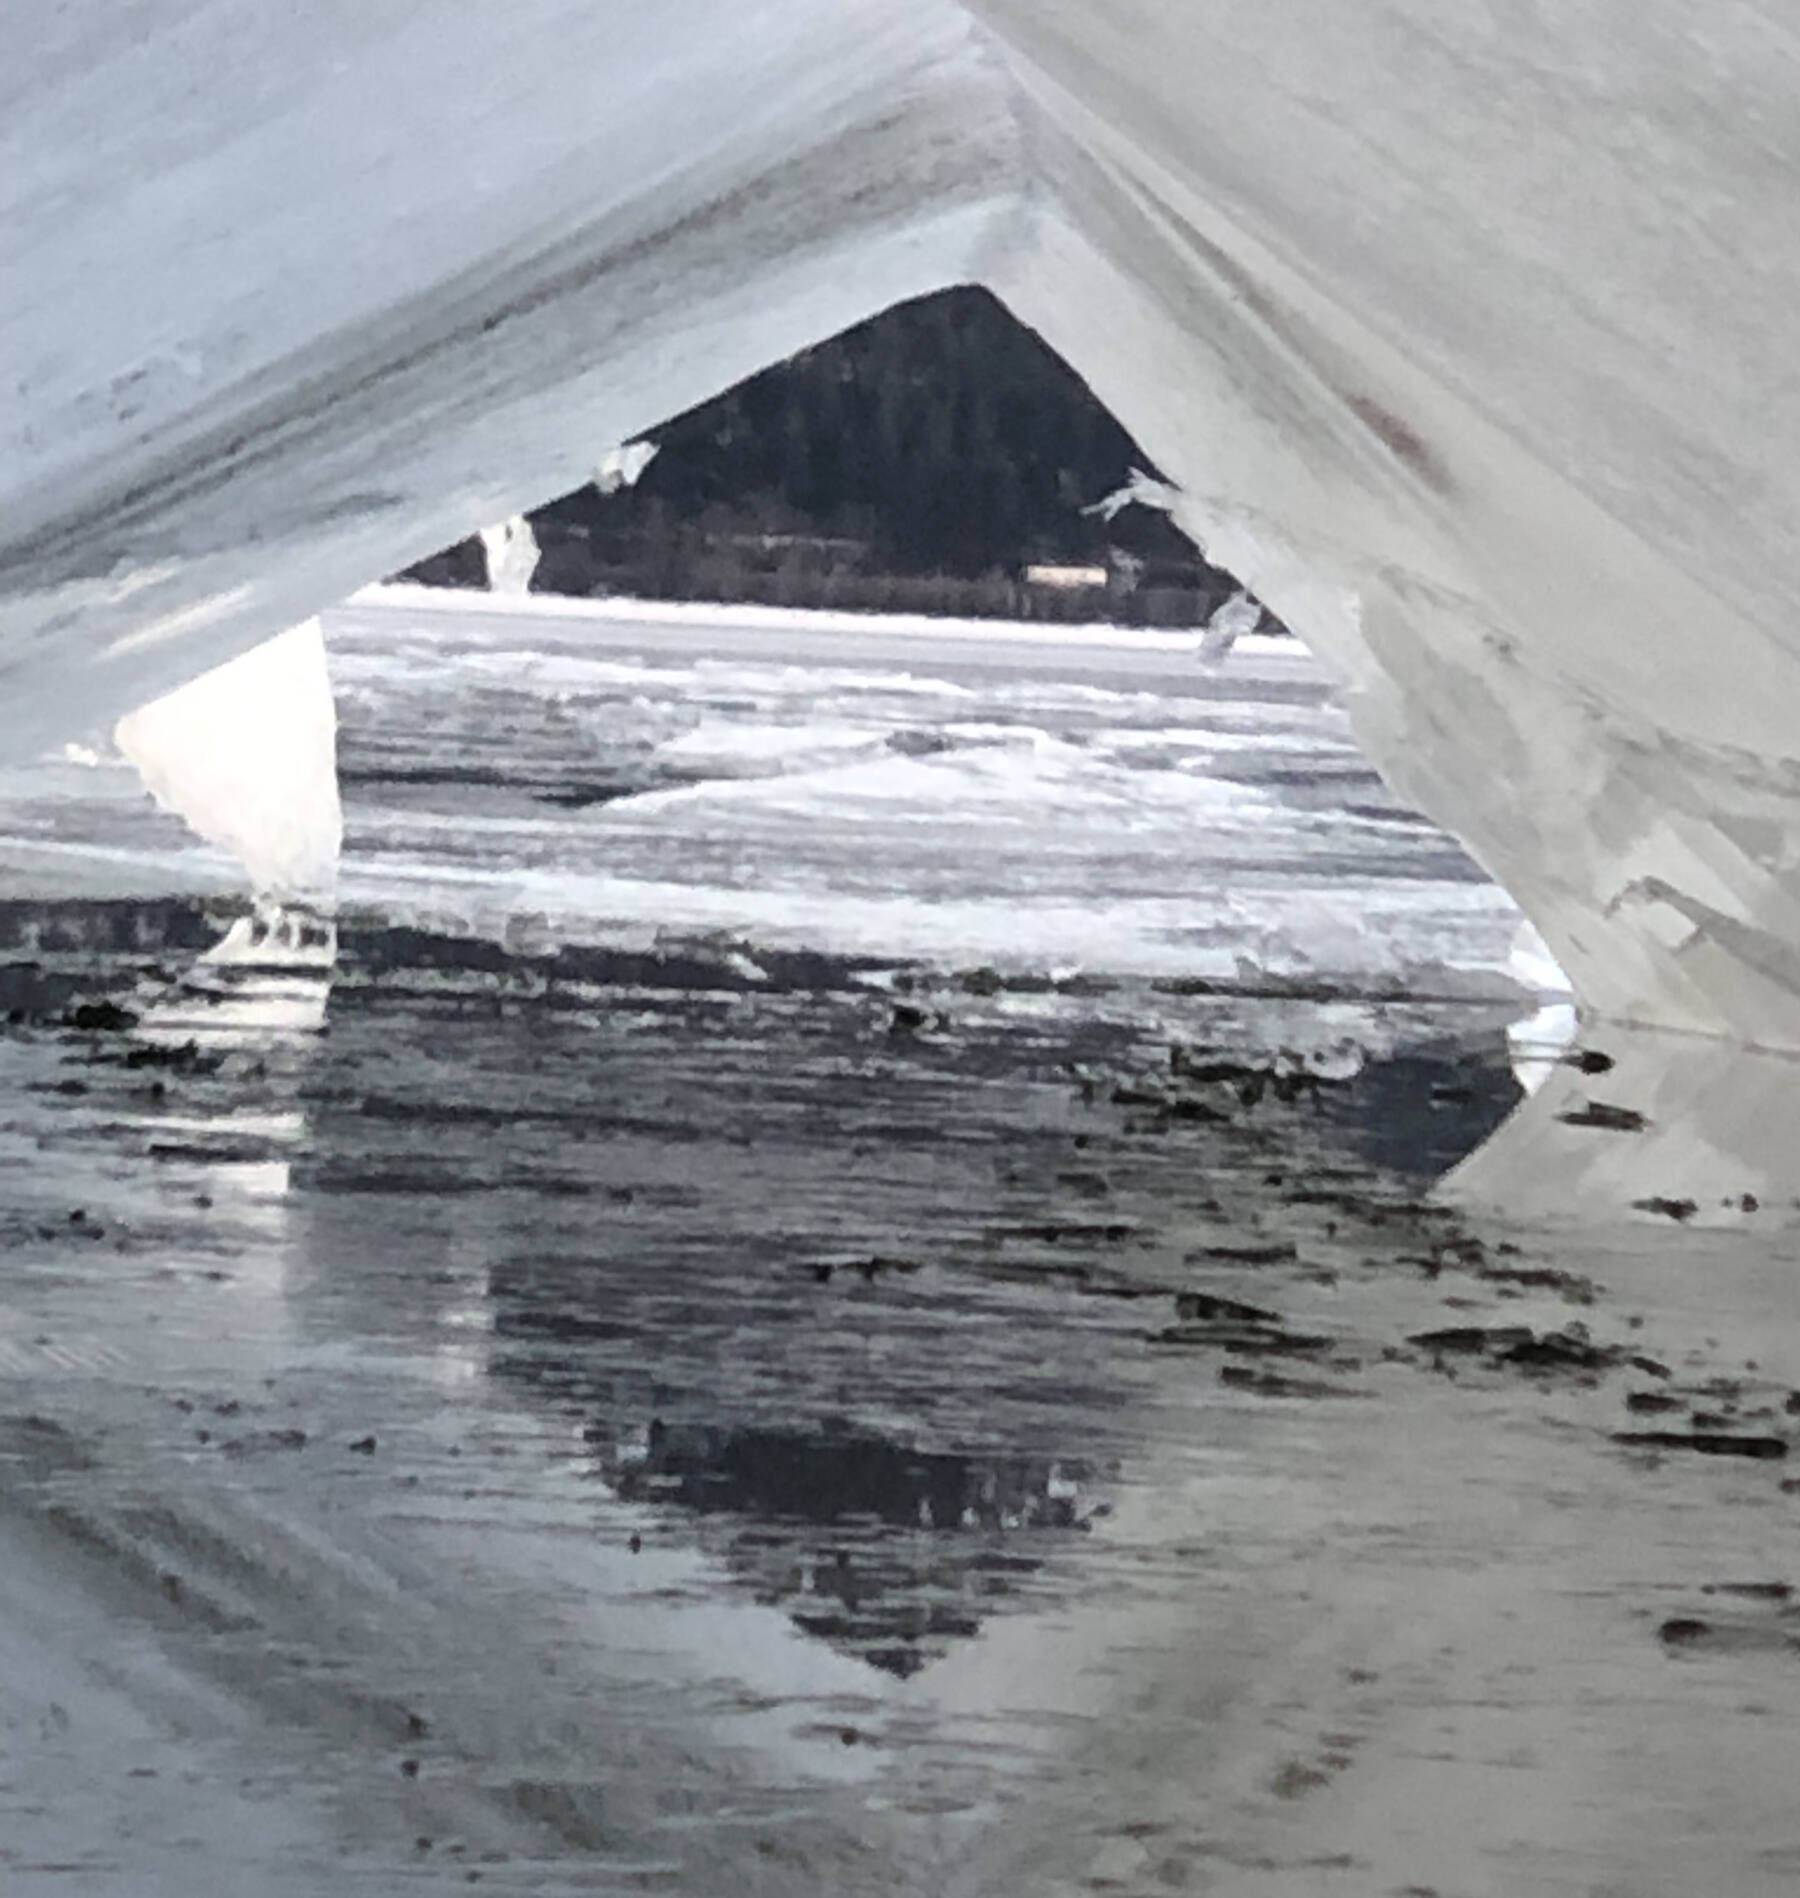 Shuswap resident Teresa Olynyk captured photos of beautiful ‘ice caves’ or tents on Little Shuswap Lake on Feb. 15, 2023.